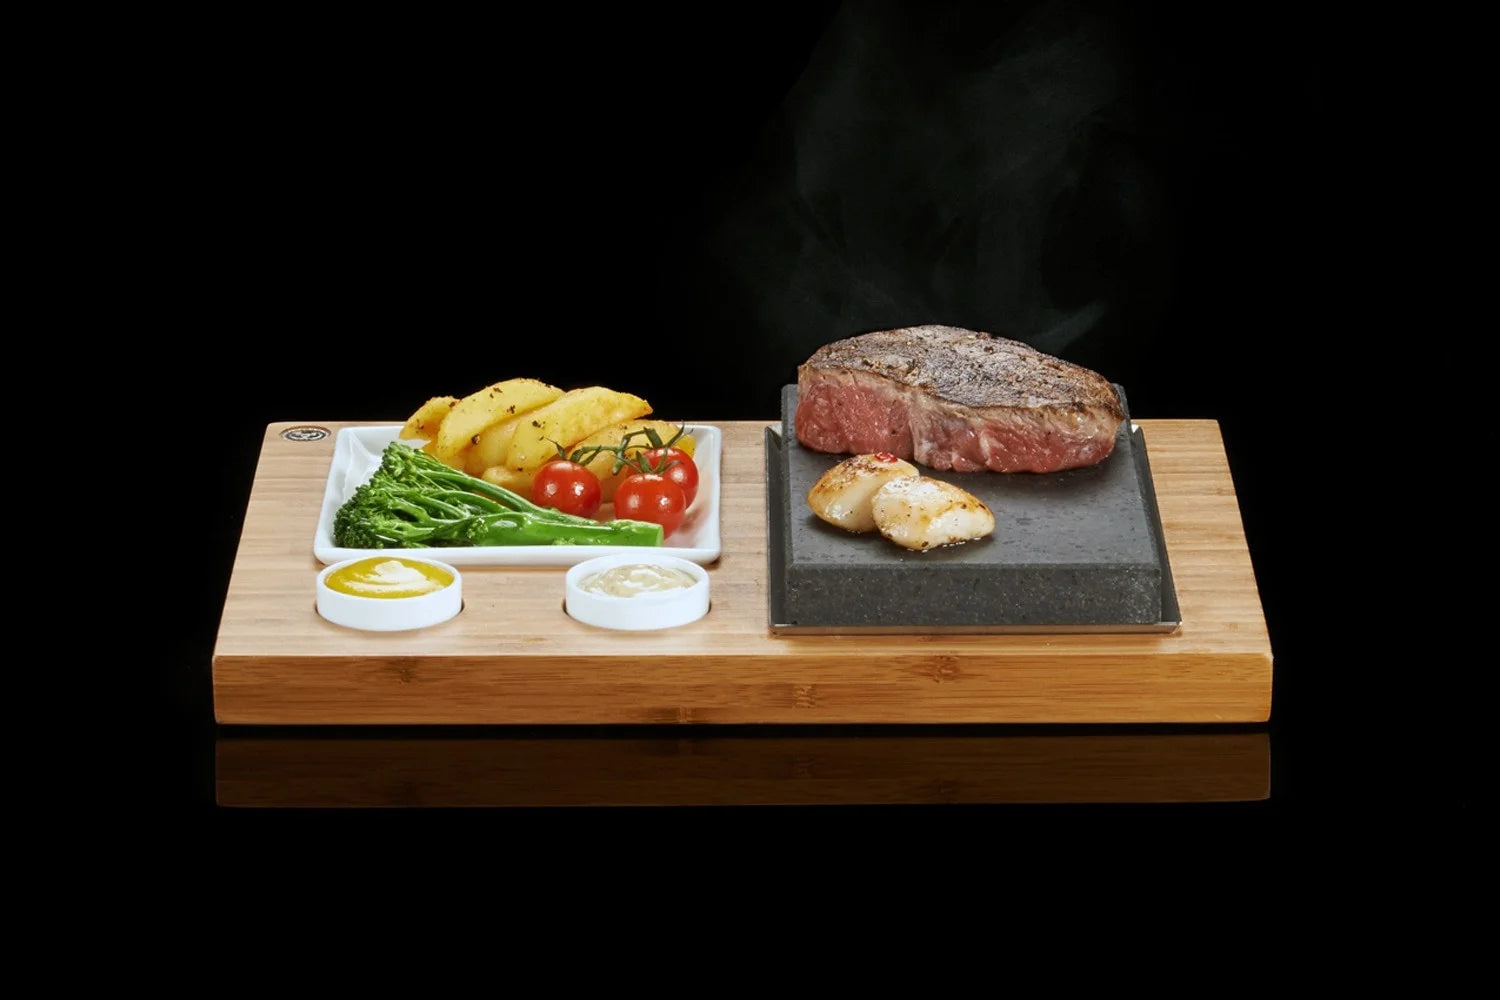 The SteakStones Steak, Sides, & Sauces Set